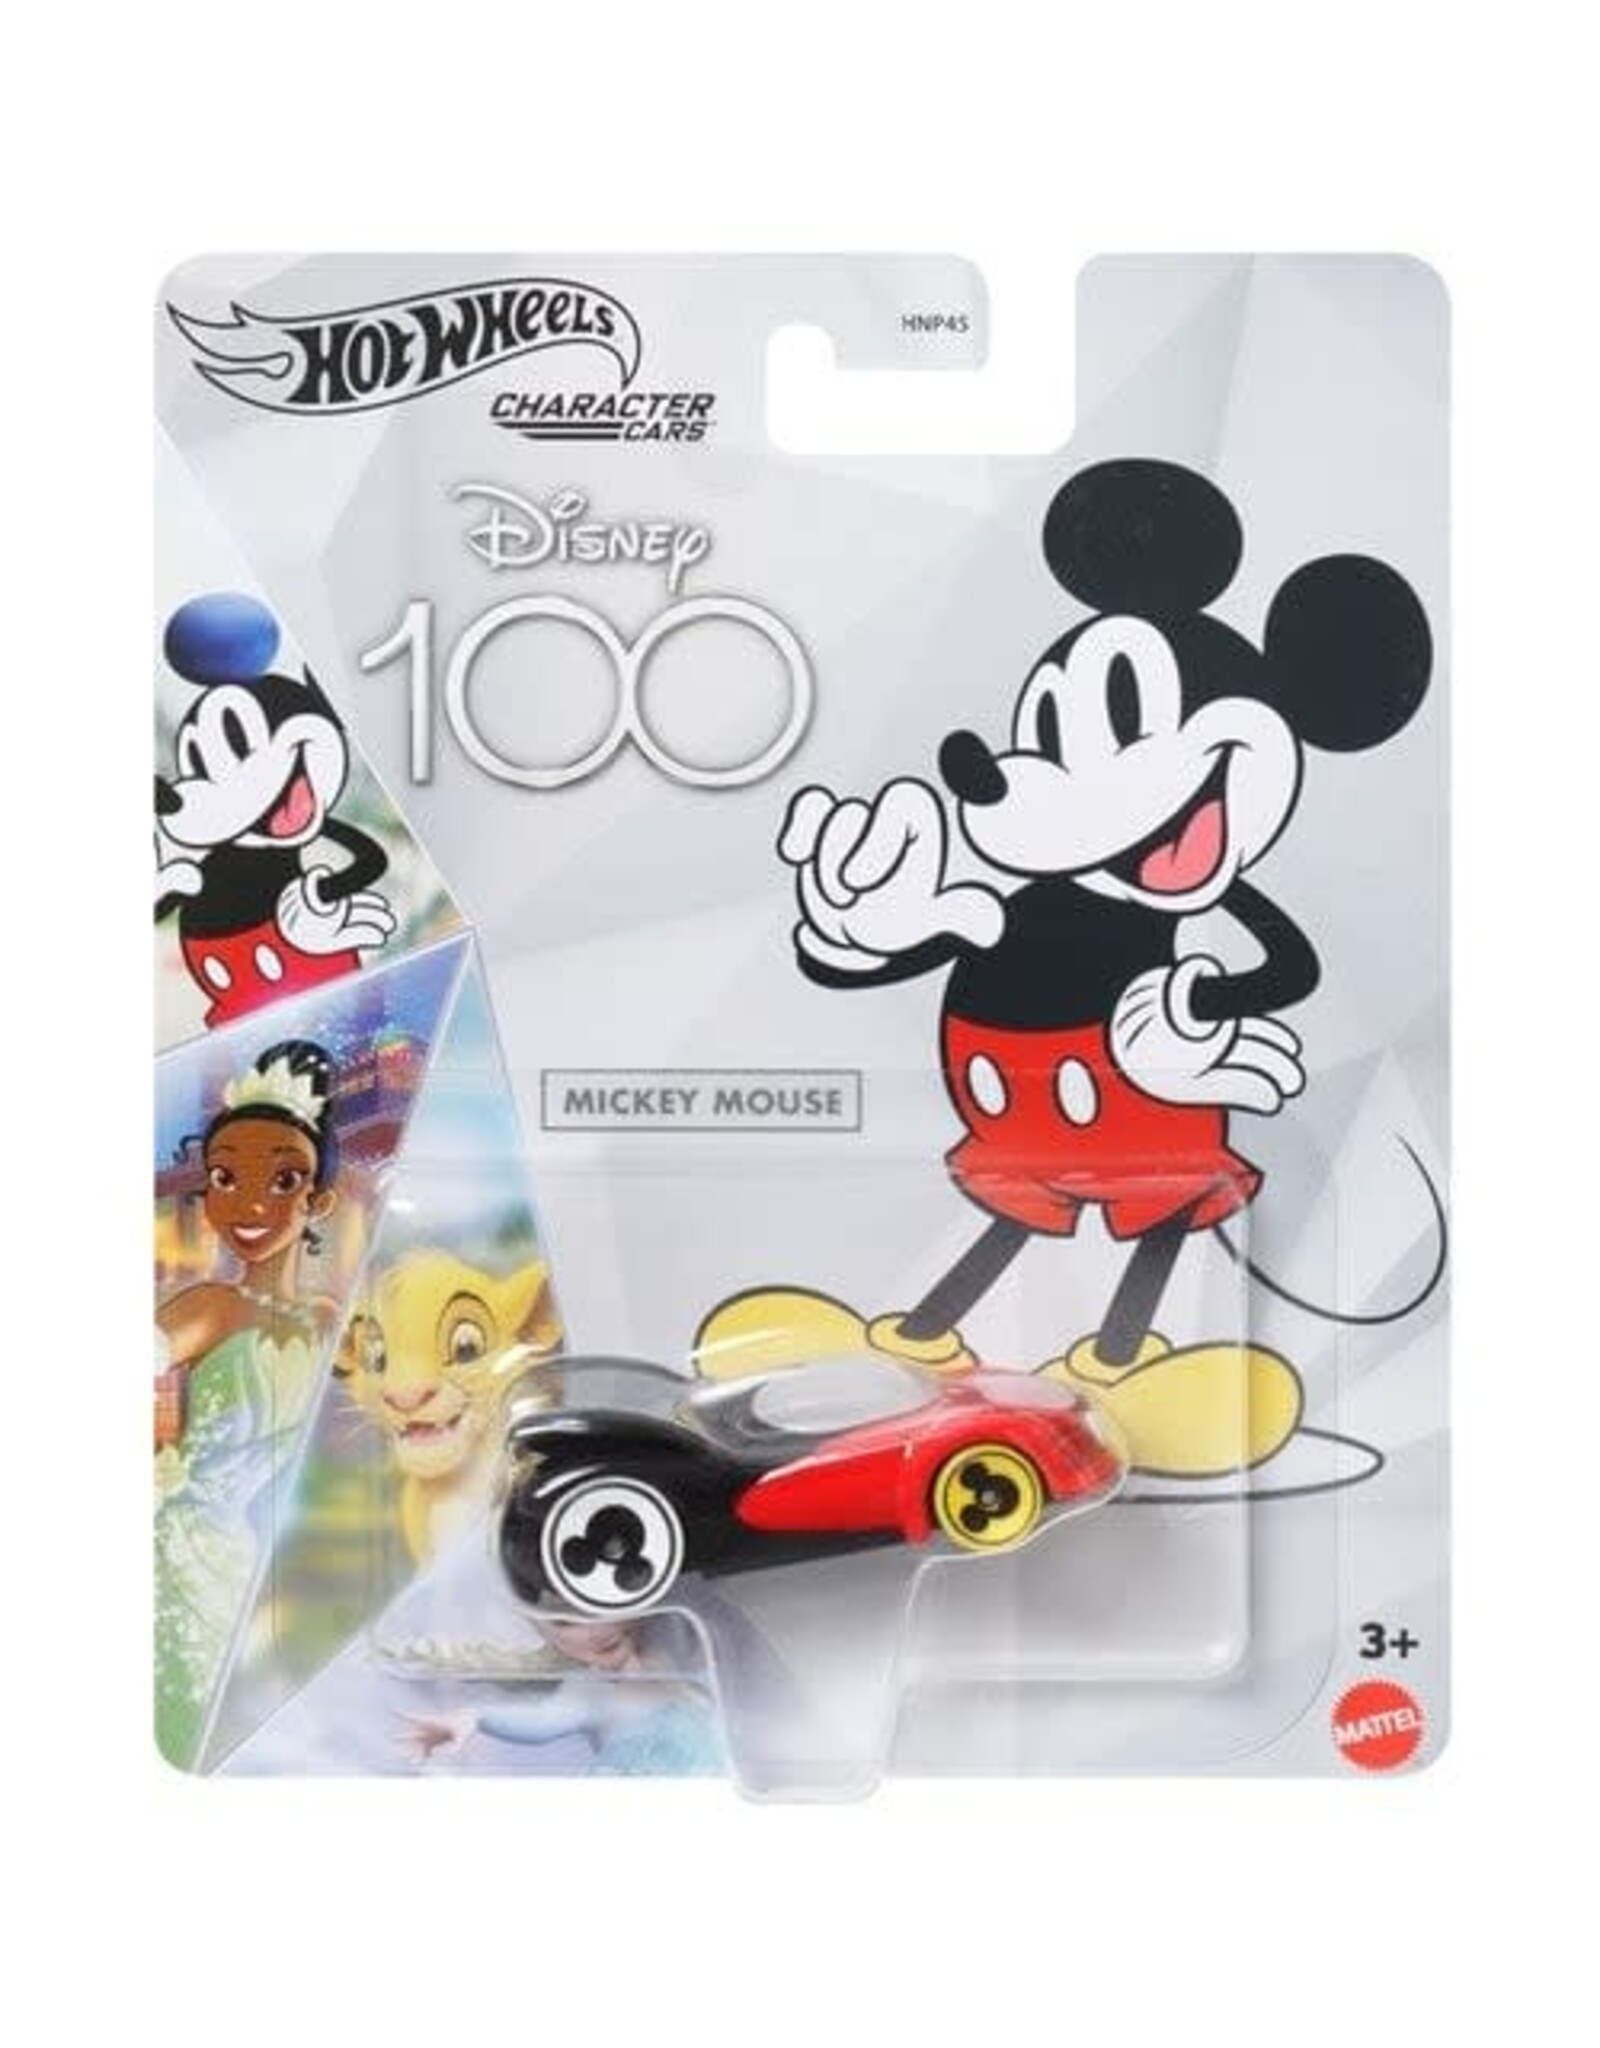 Mattel Hot Wheels Disney 100th Character Car - Mickey Mouse